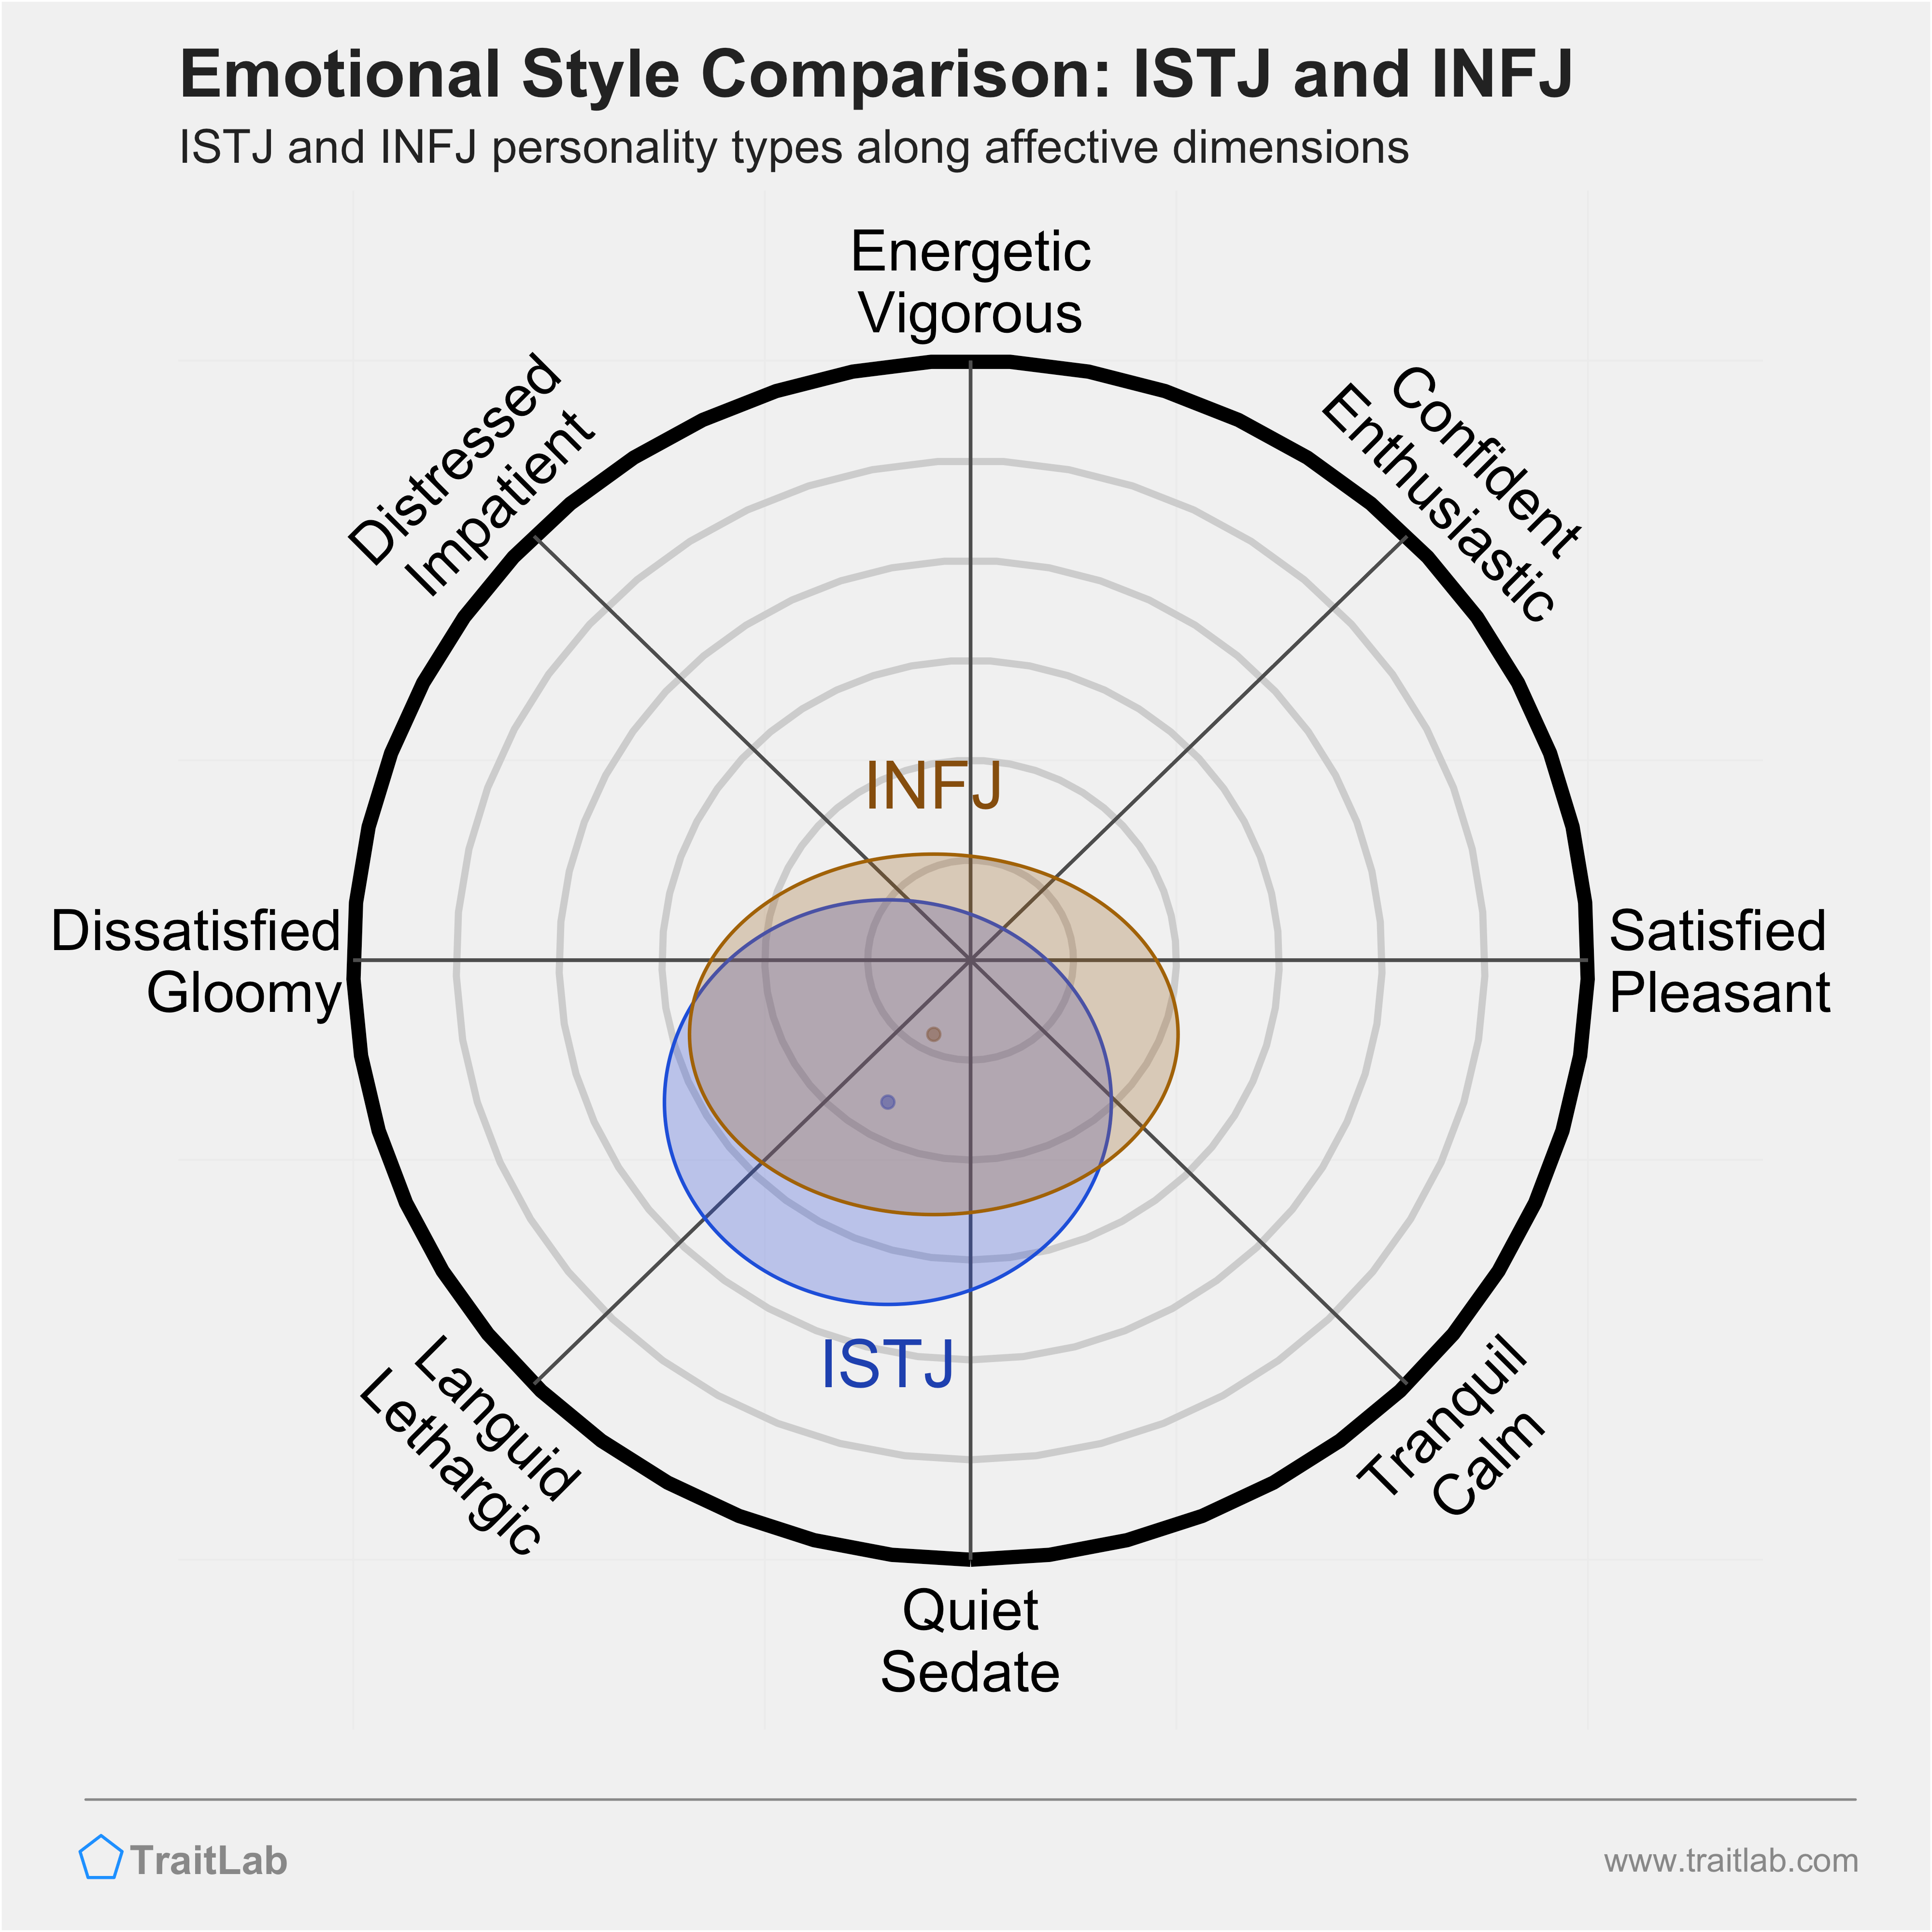 ISTJ and INFJ comparison across emotional (affective) dimensions